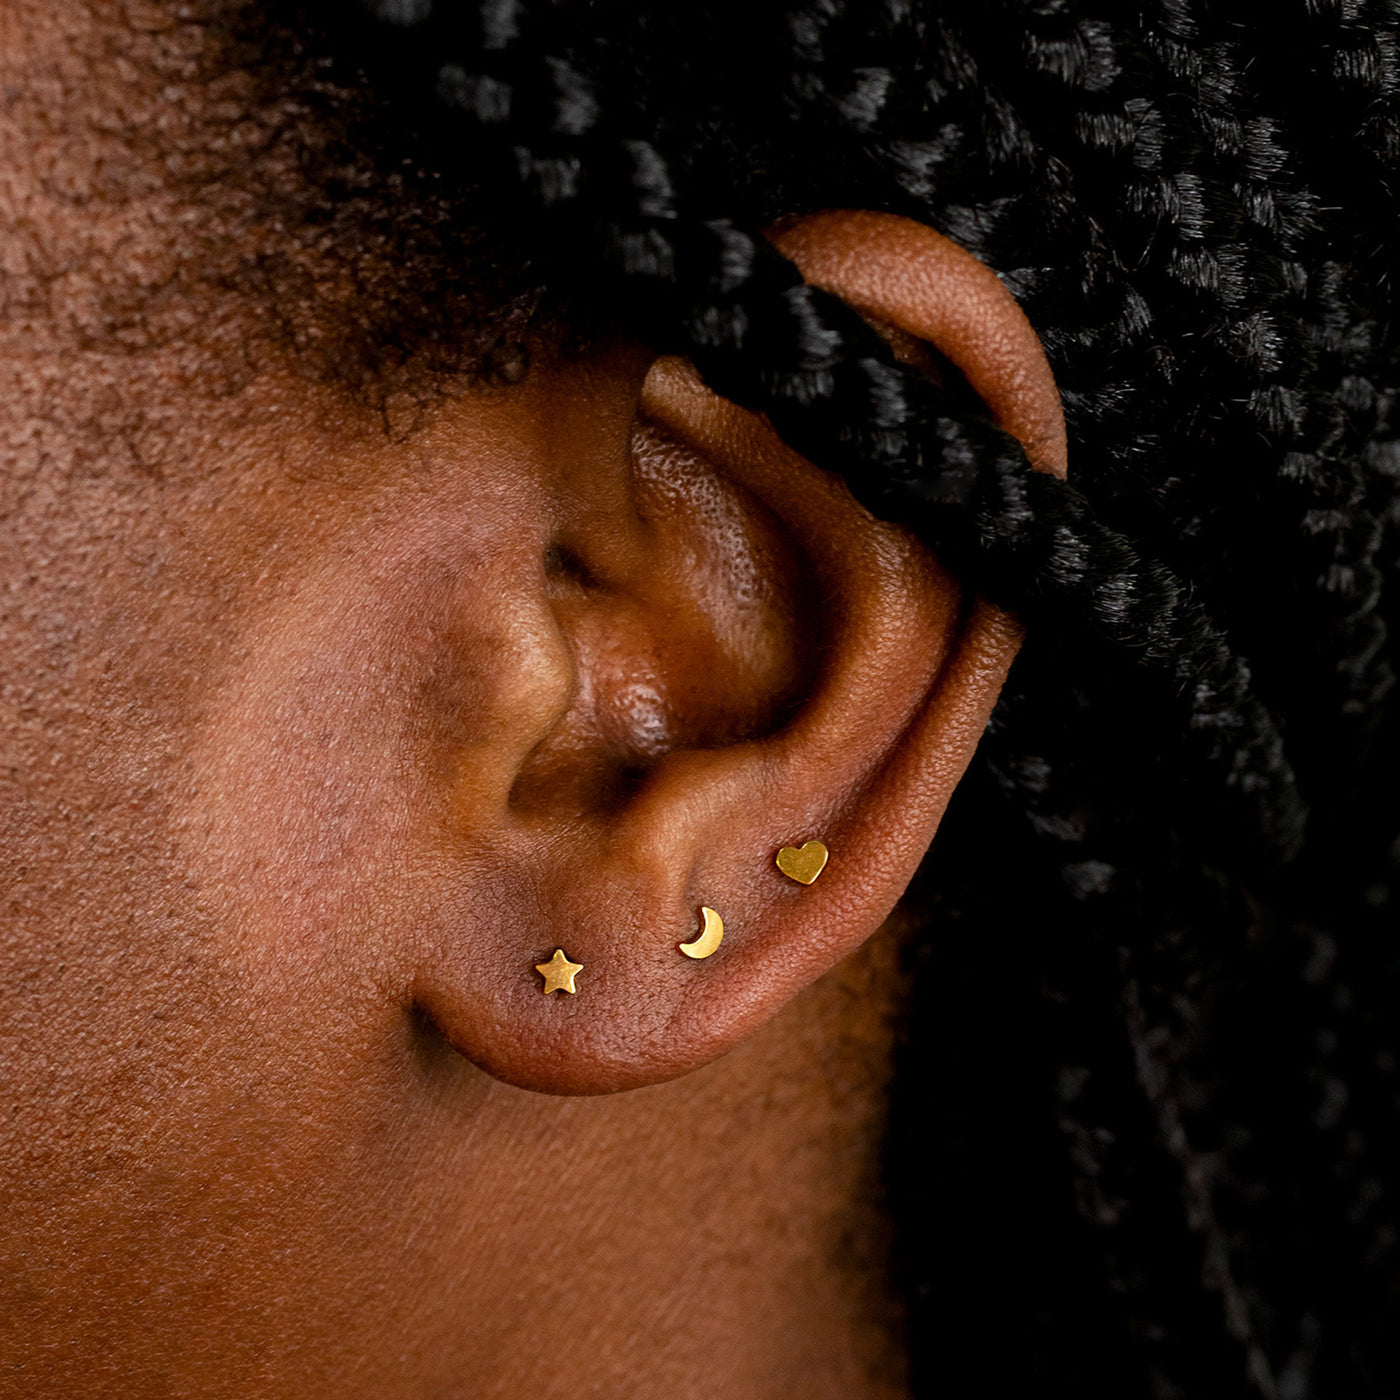 24 CARAT GOLD PLATED EAR PIERCING STUDS STUD EARRINGS SURGICAL WOMENS  JEWELLERY | eBay